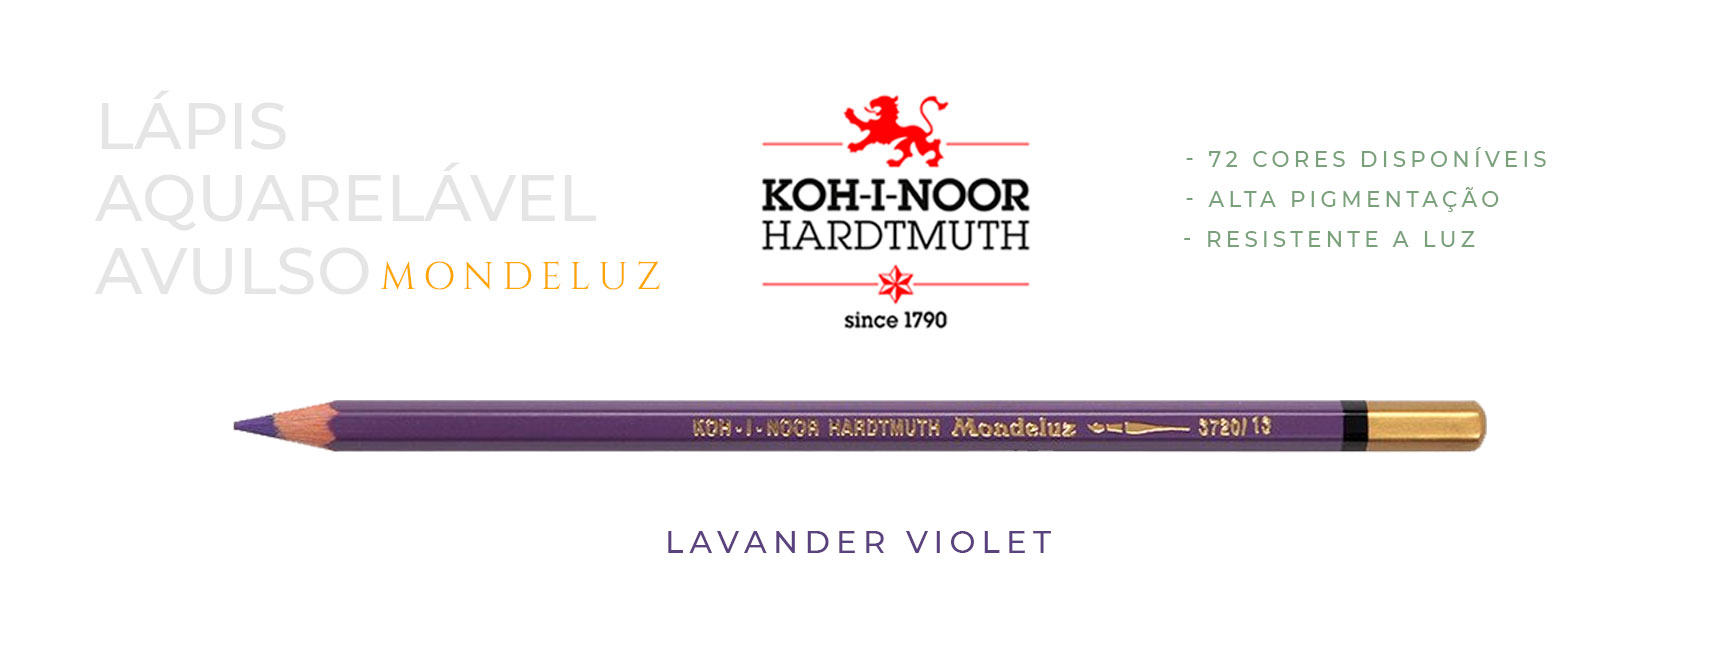 Lápis aquarelável avulso lavander violet koh-i-noor